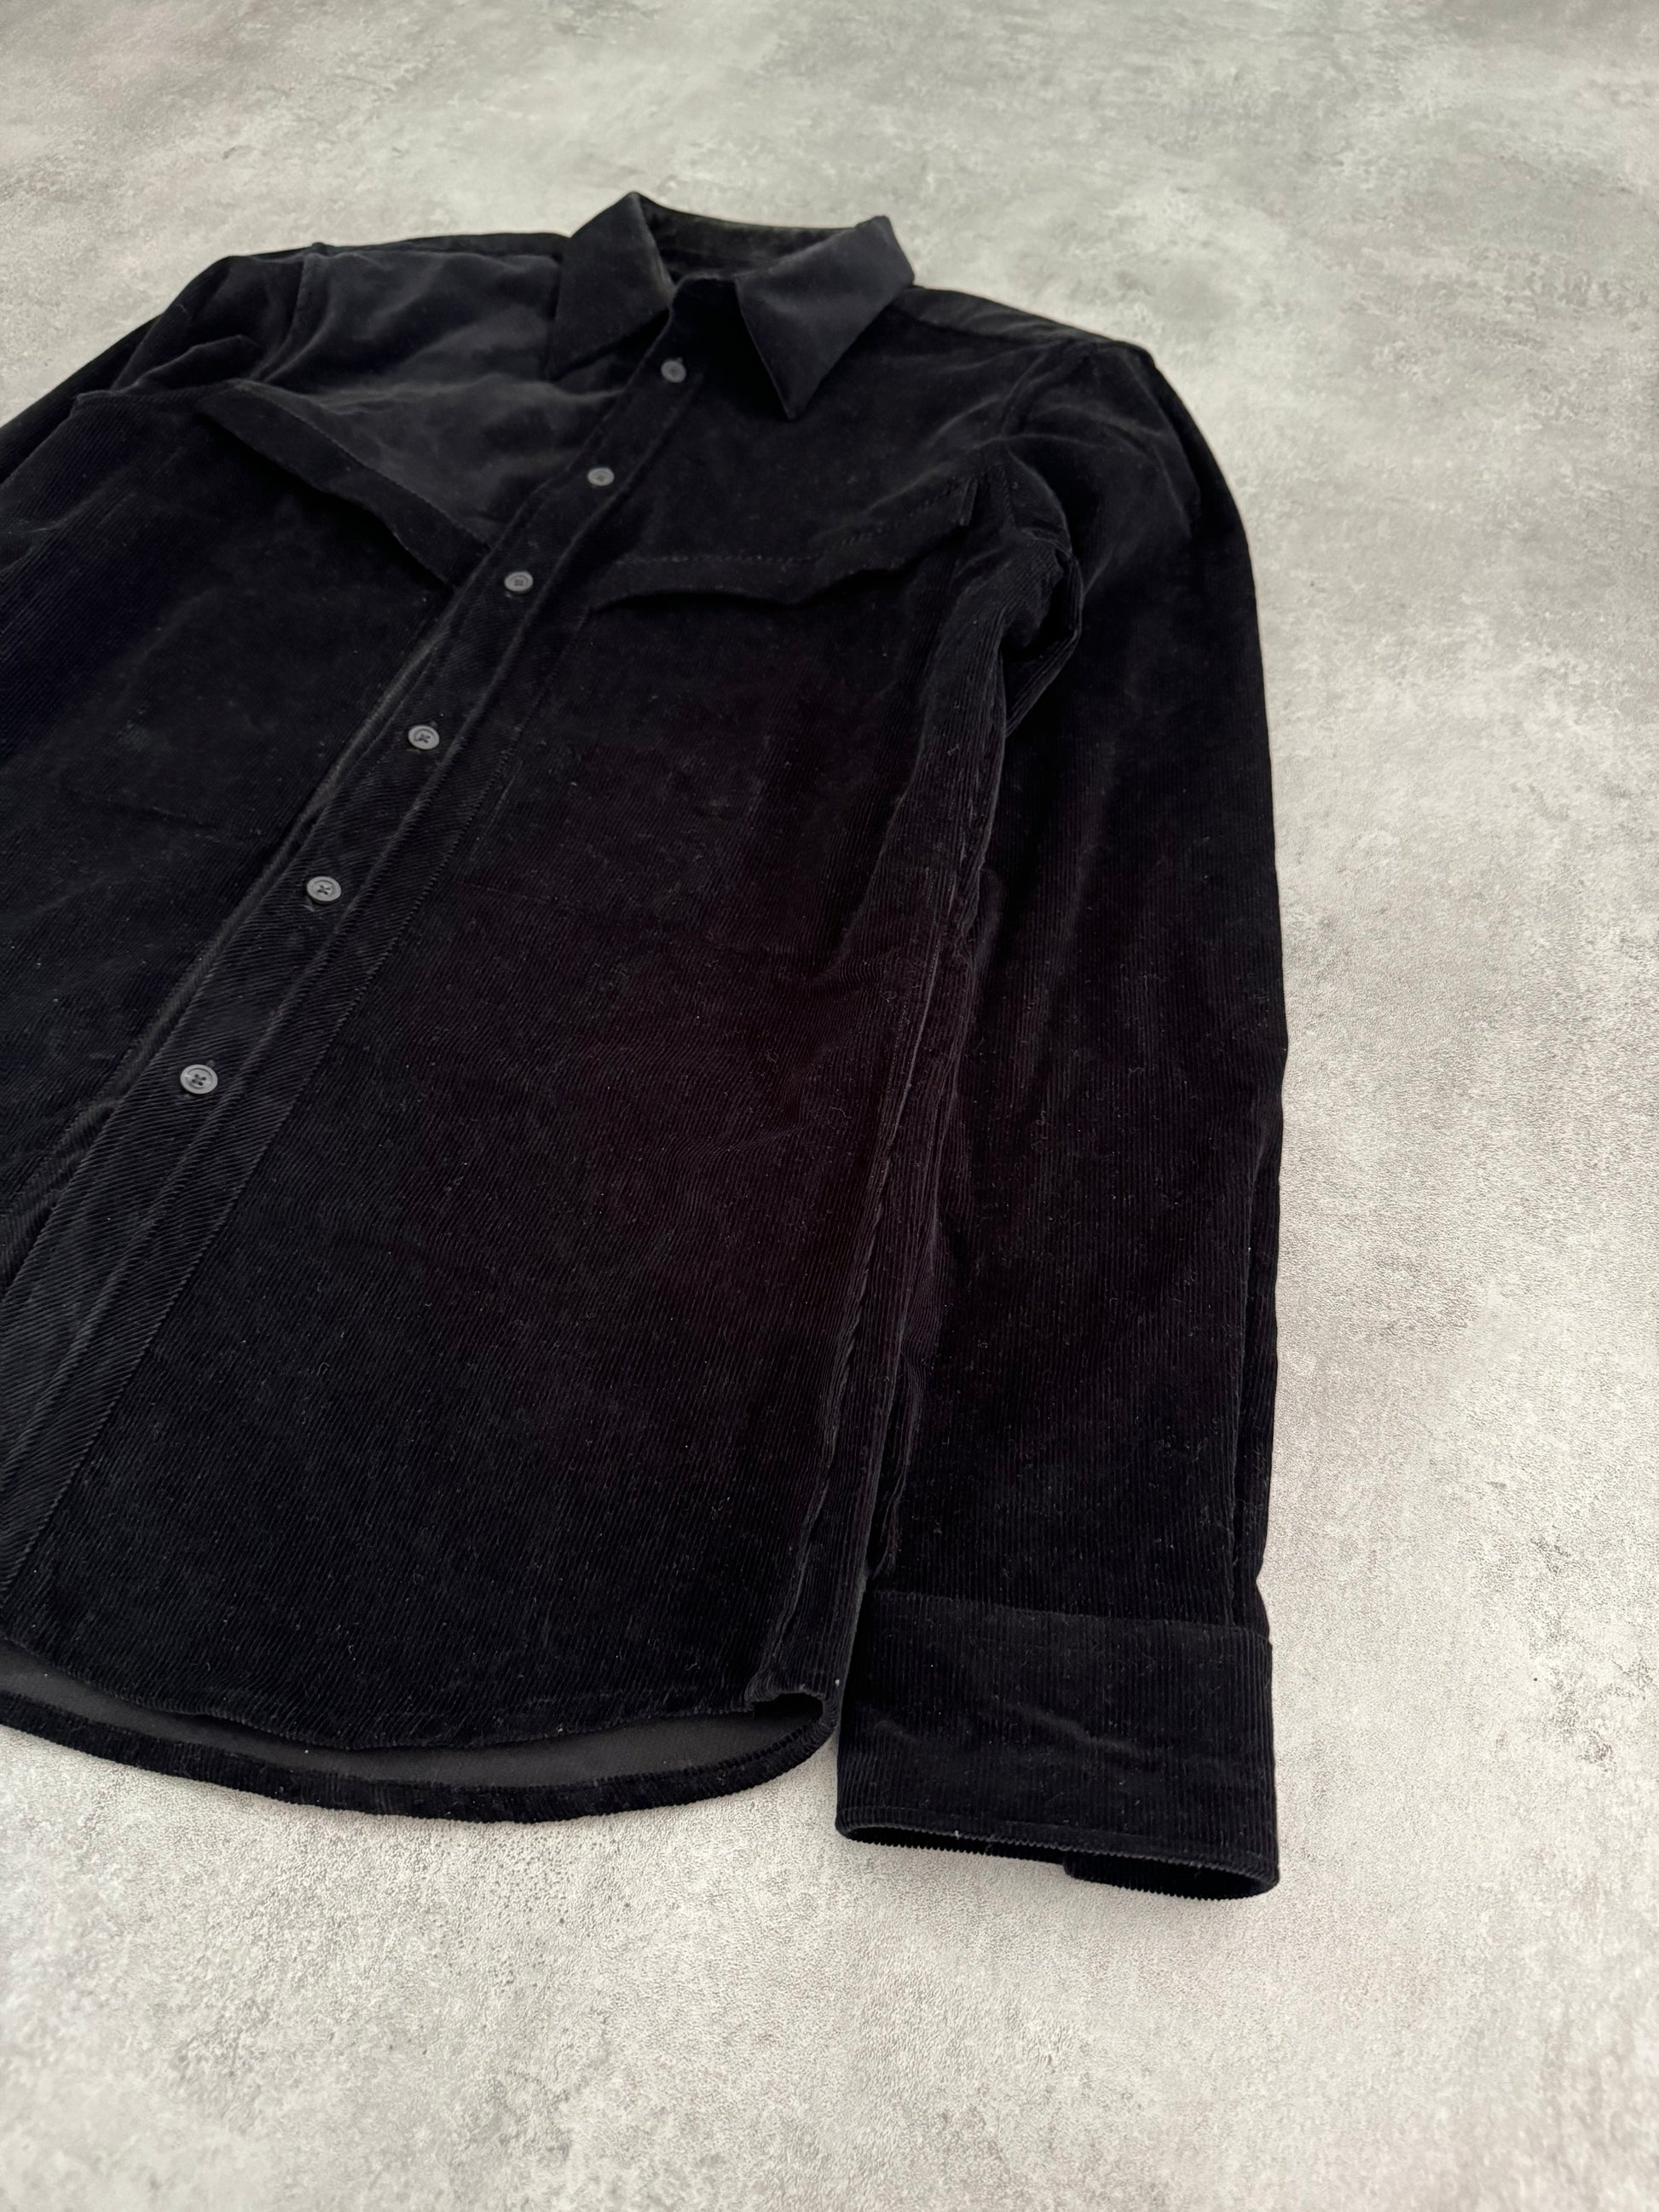 FW2014 Givenchy Pre-Collection Velvet Shirt (S) - 3